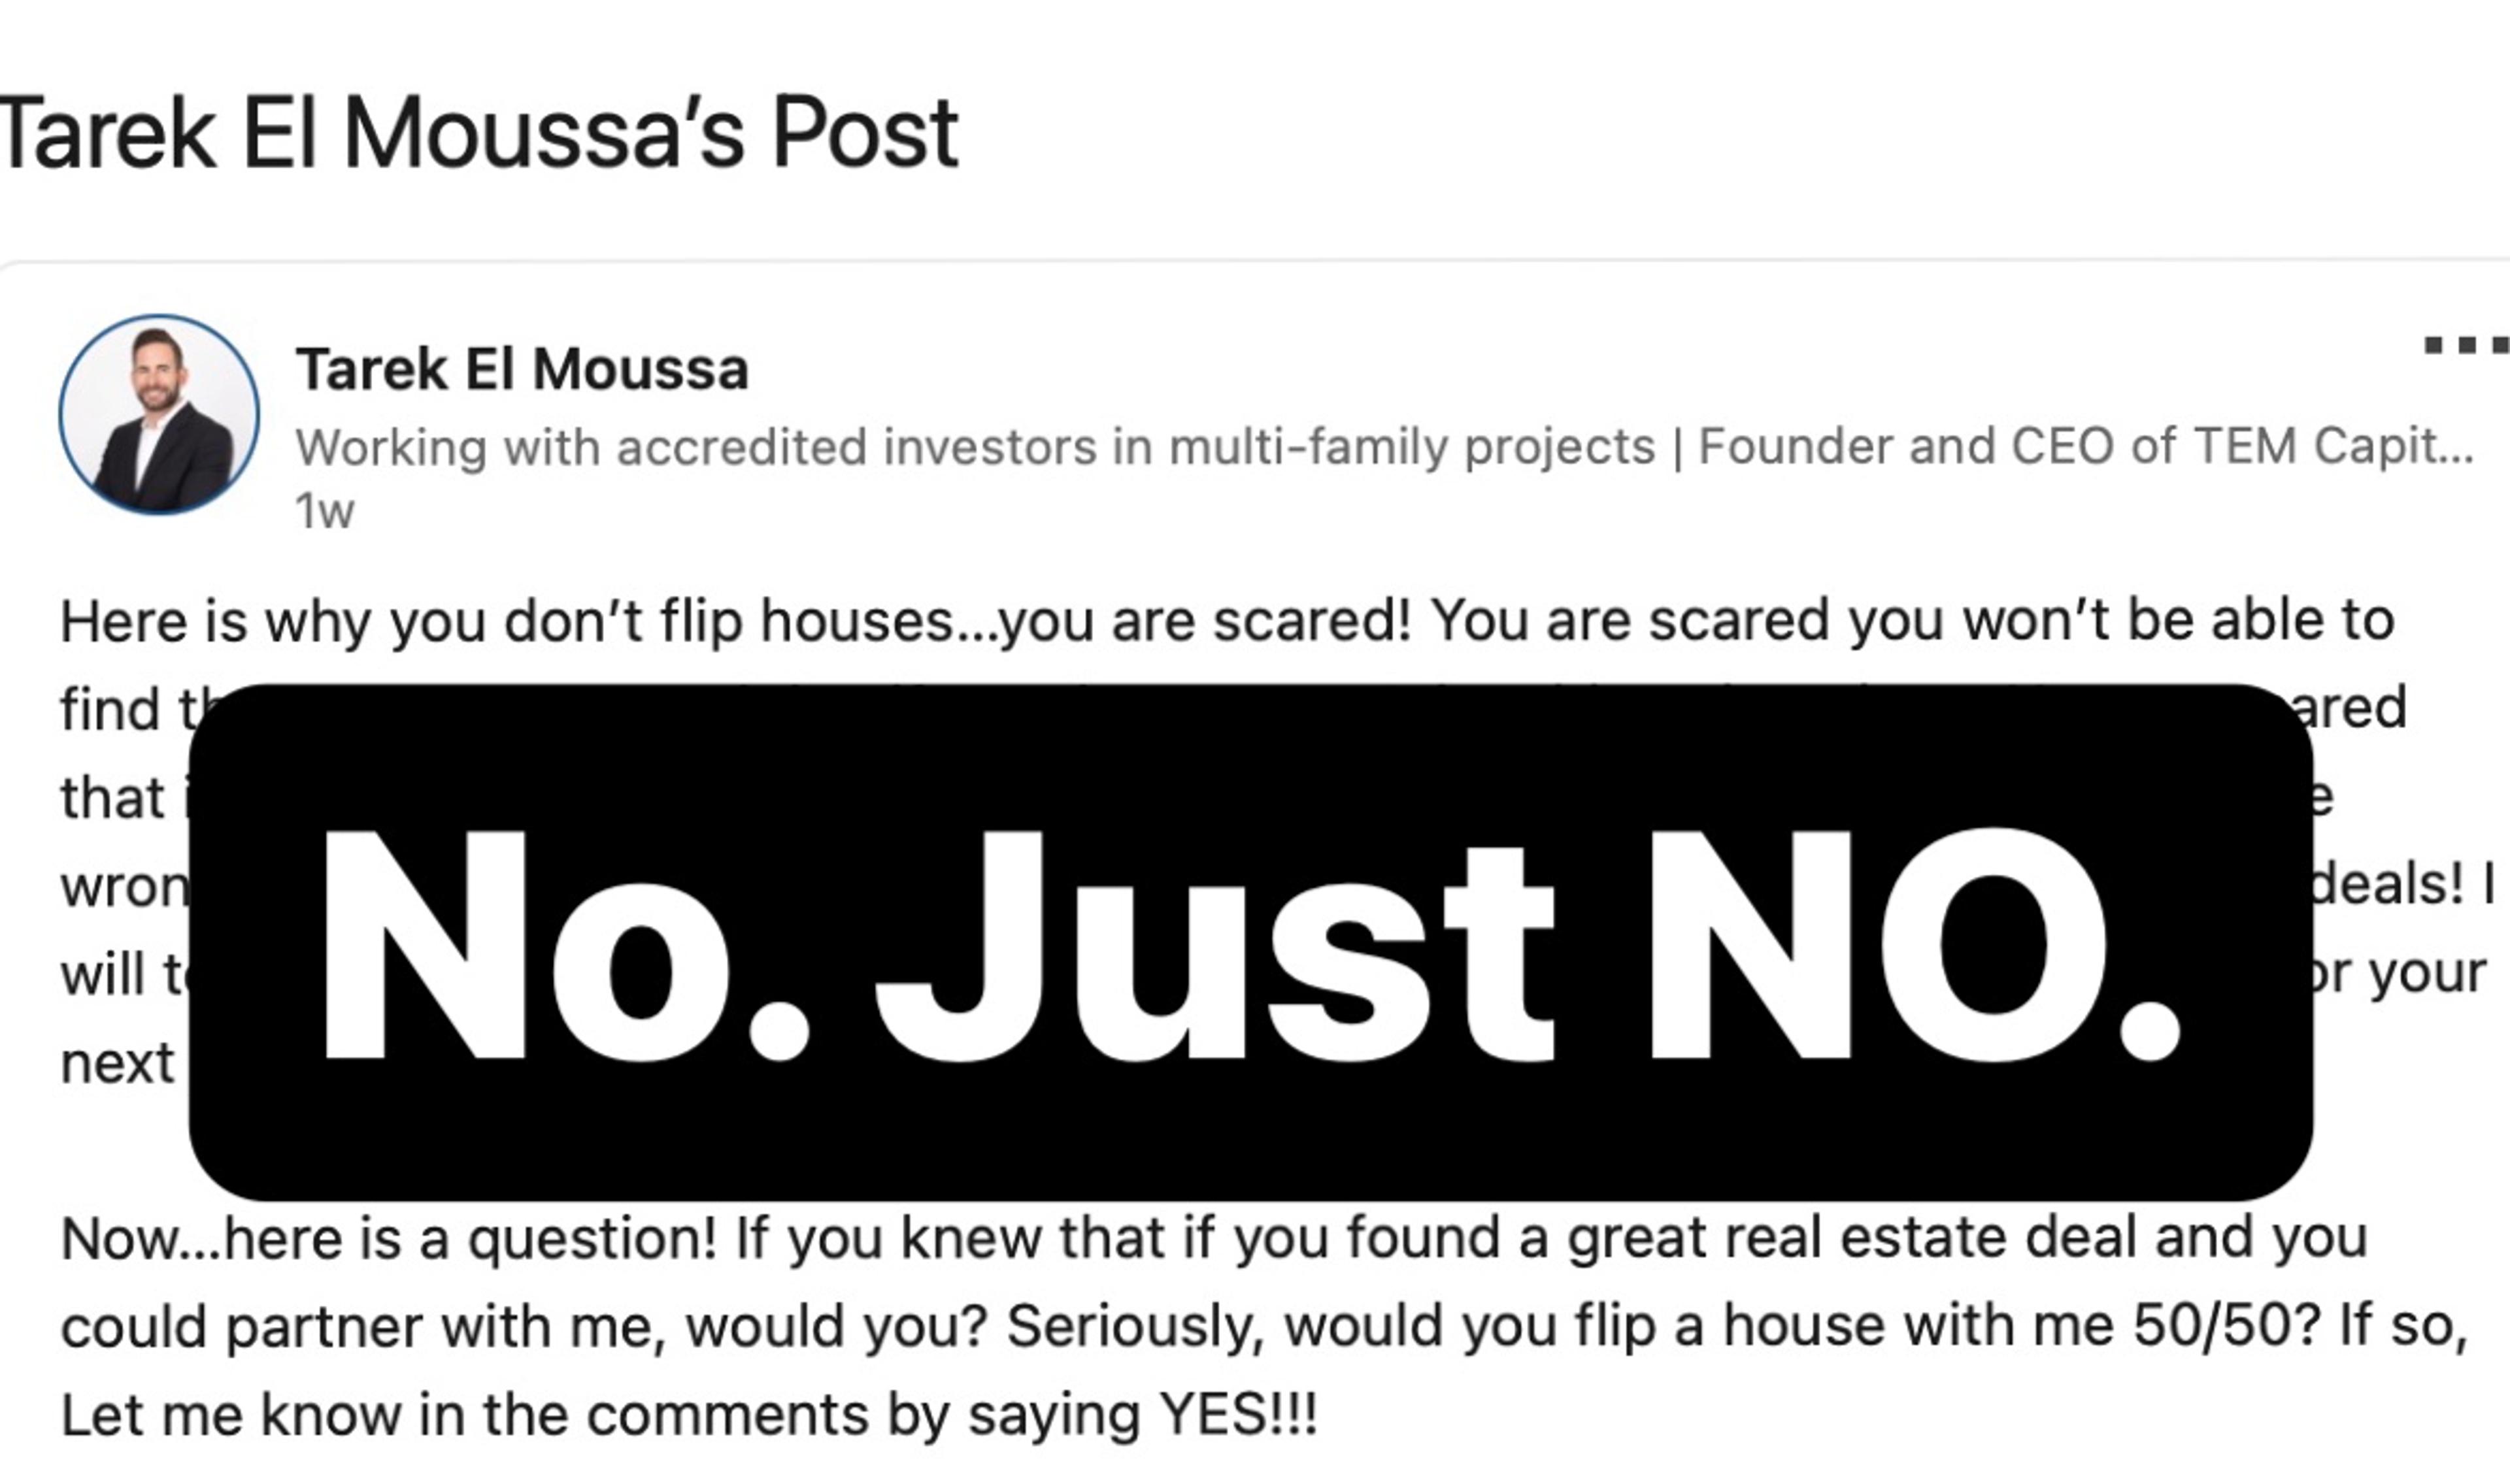 Screenshot of Tarek El Moussa's tone-deaf LinkedIn post calling non-flippers "scared".